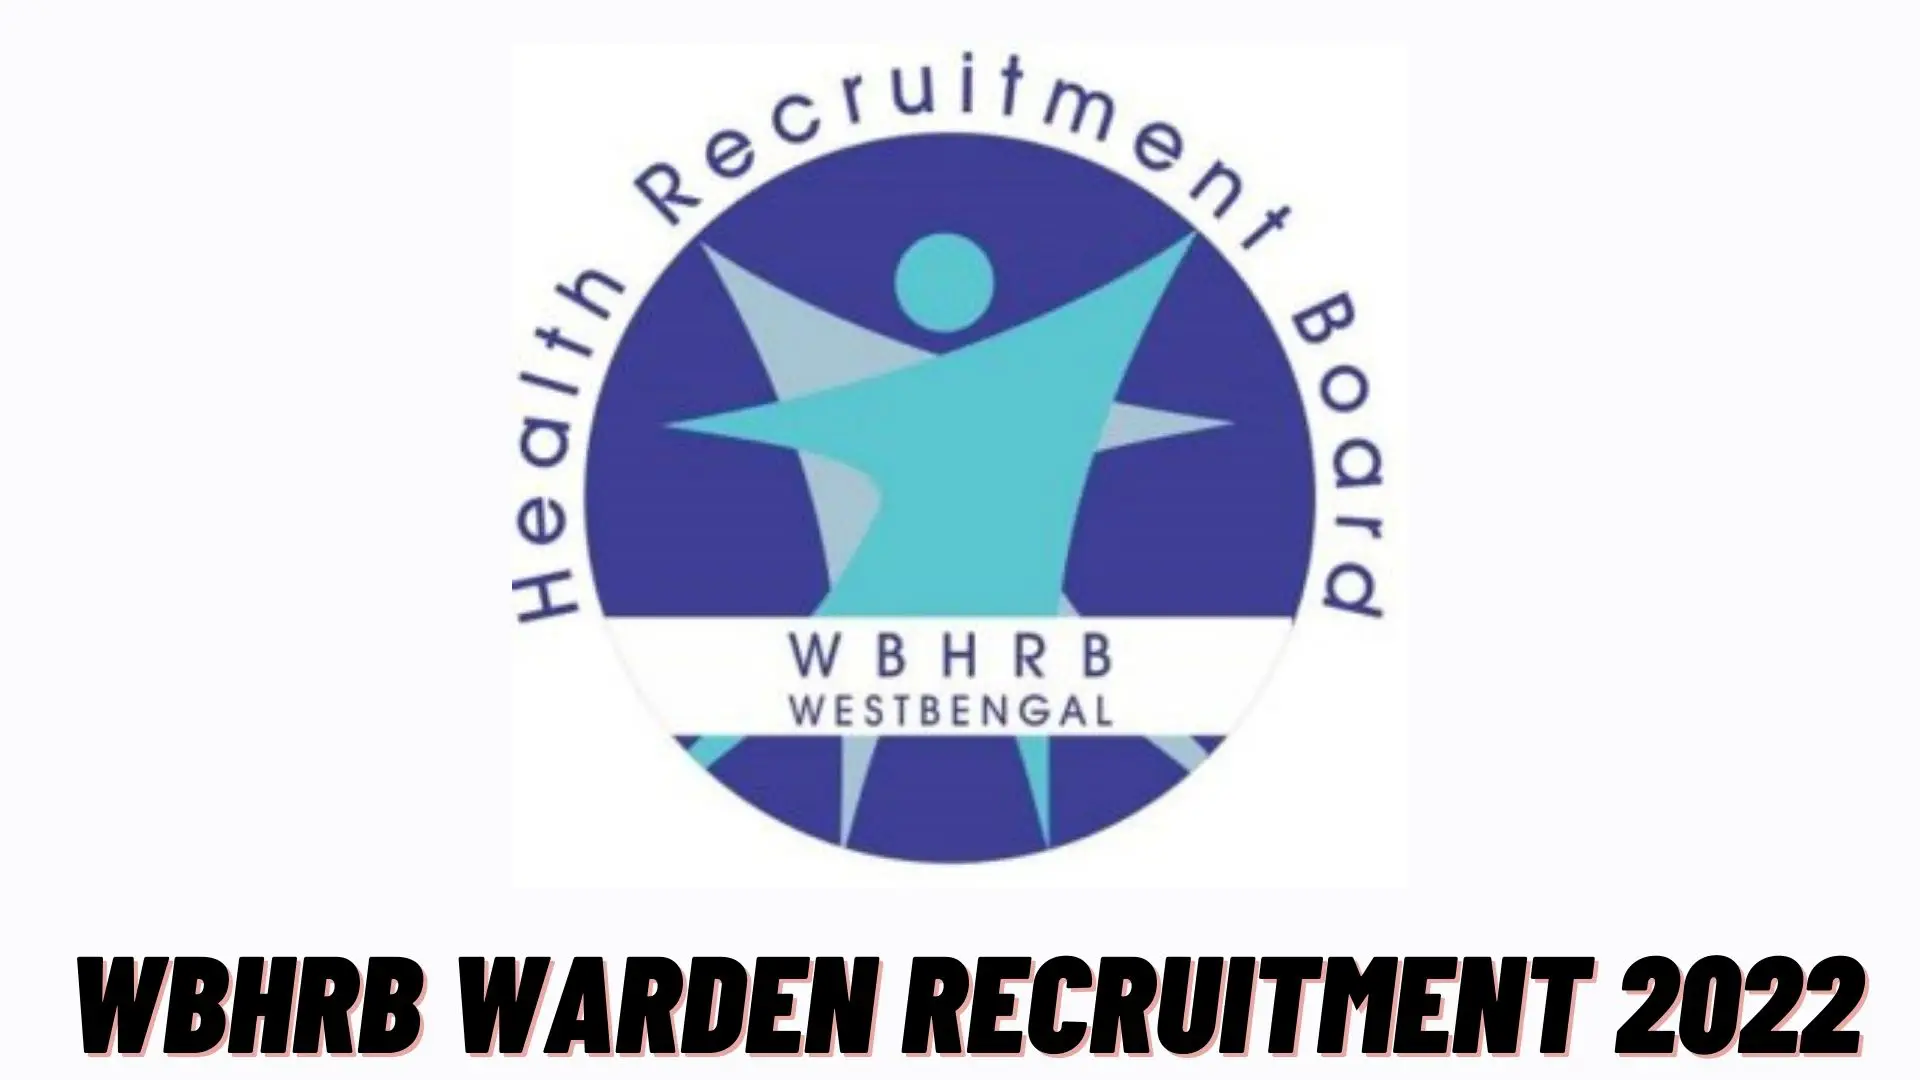 WBHRB Warden Recruitment 2022